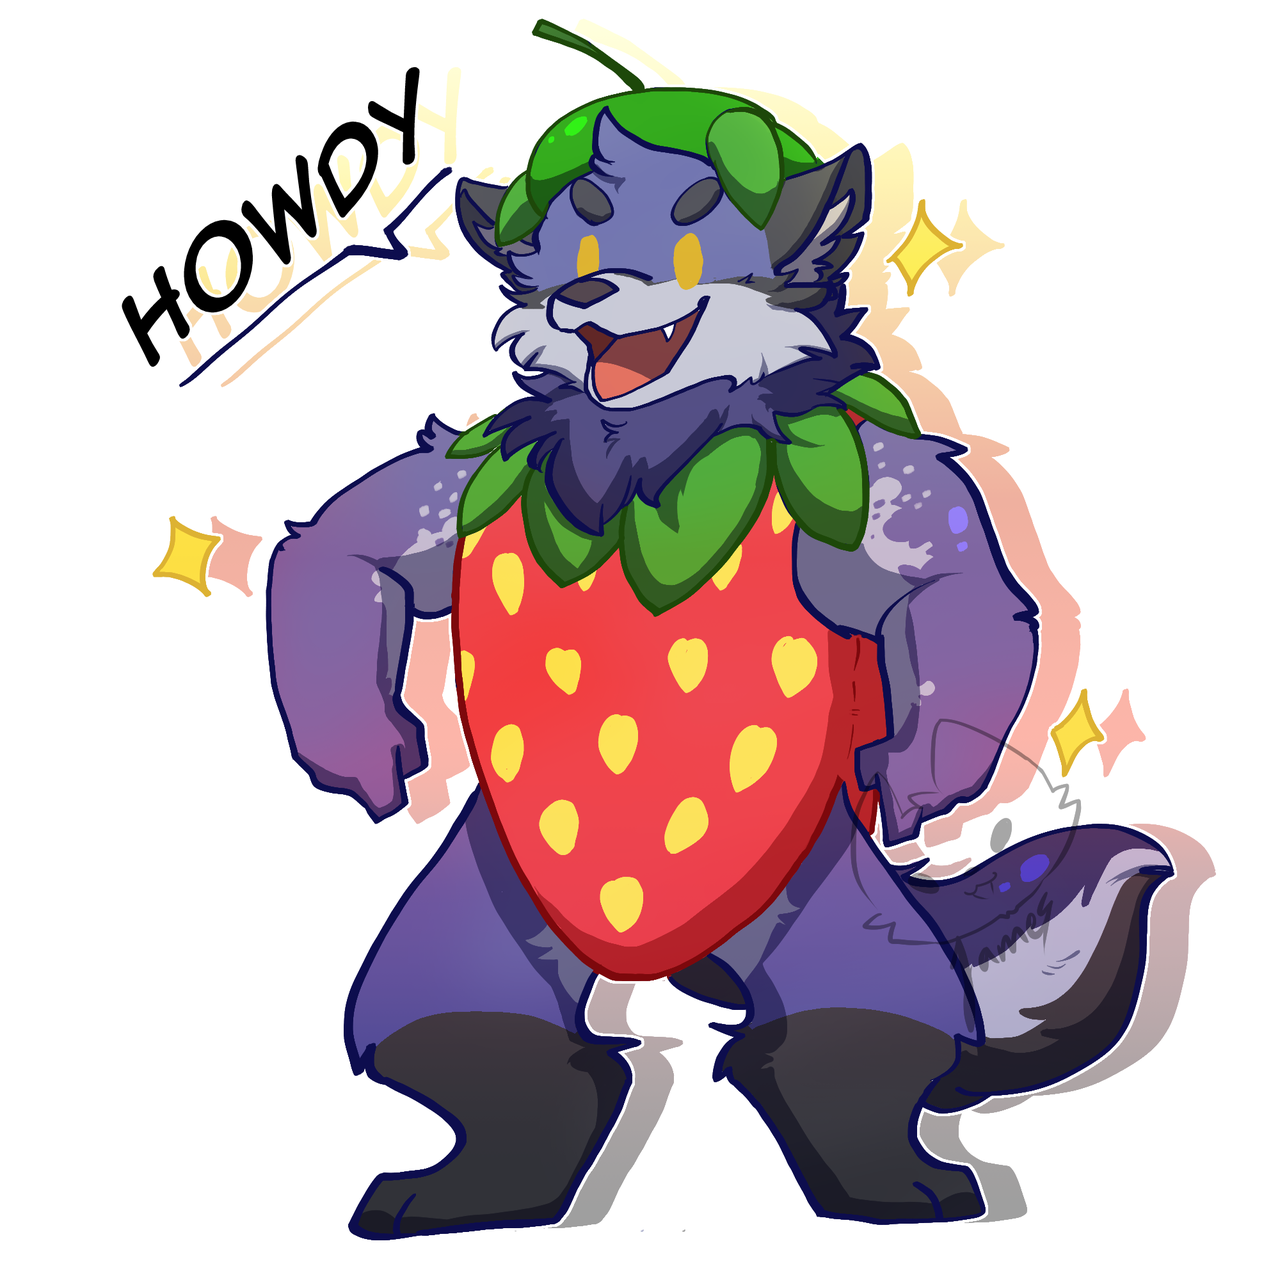 A howdy strawberry boi